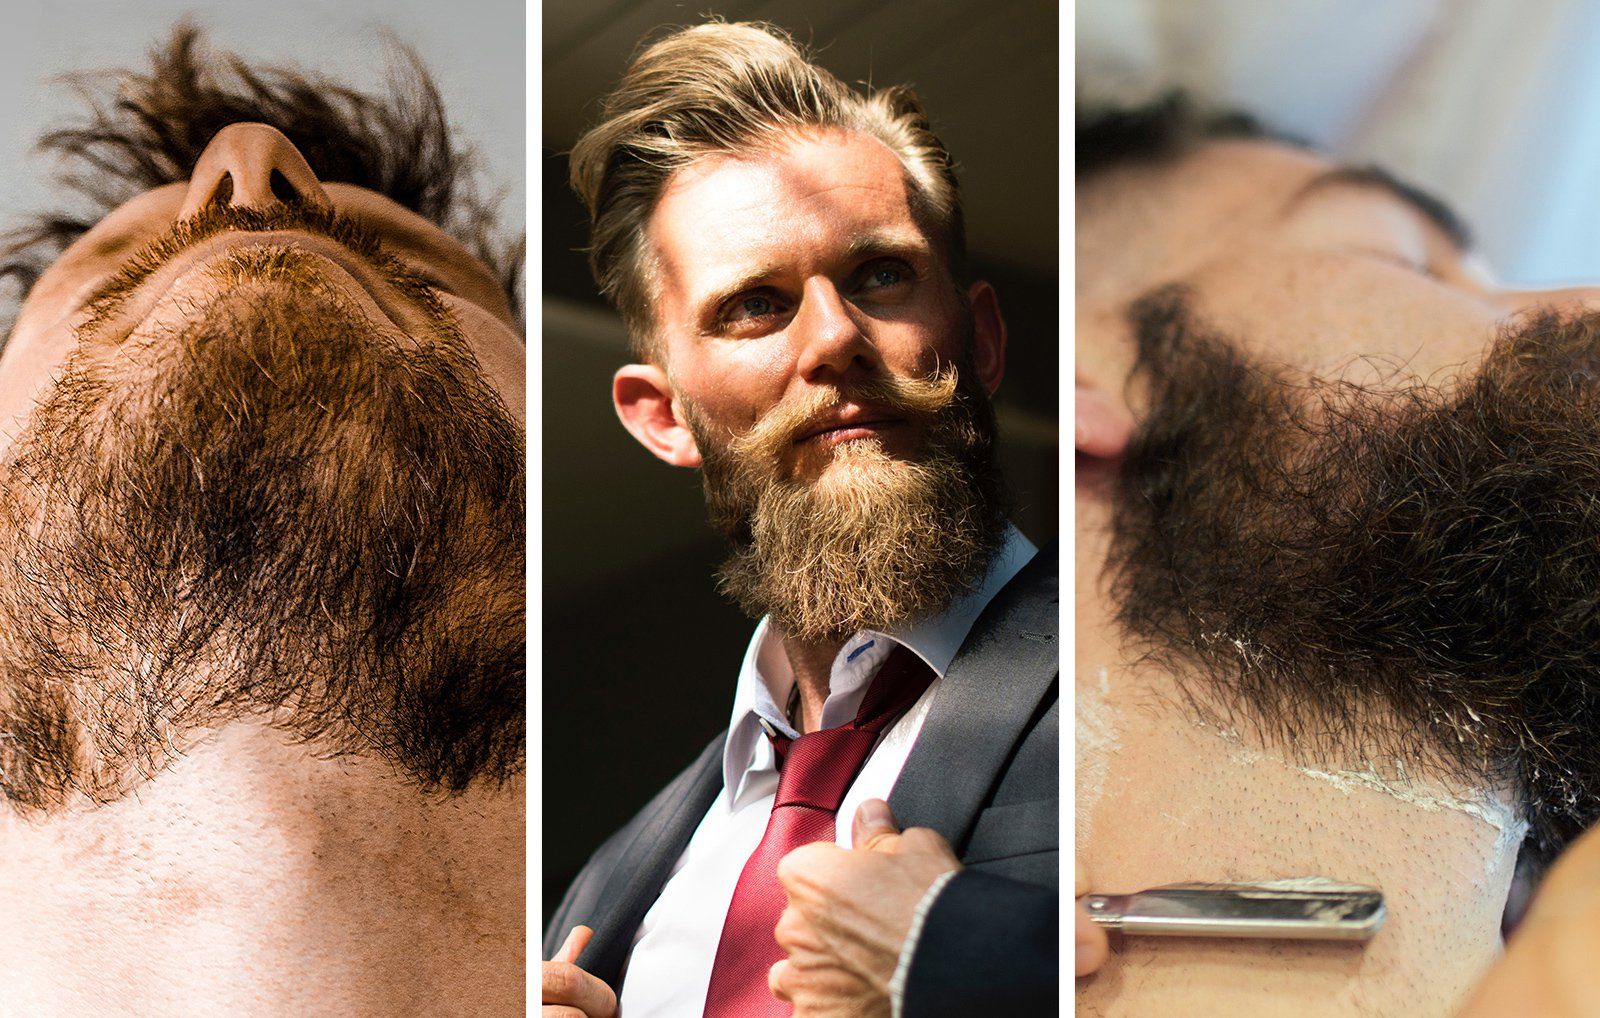 Beard Maintenance Tips, According to Barbers | Men's Health